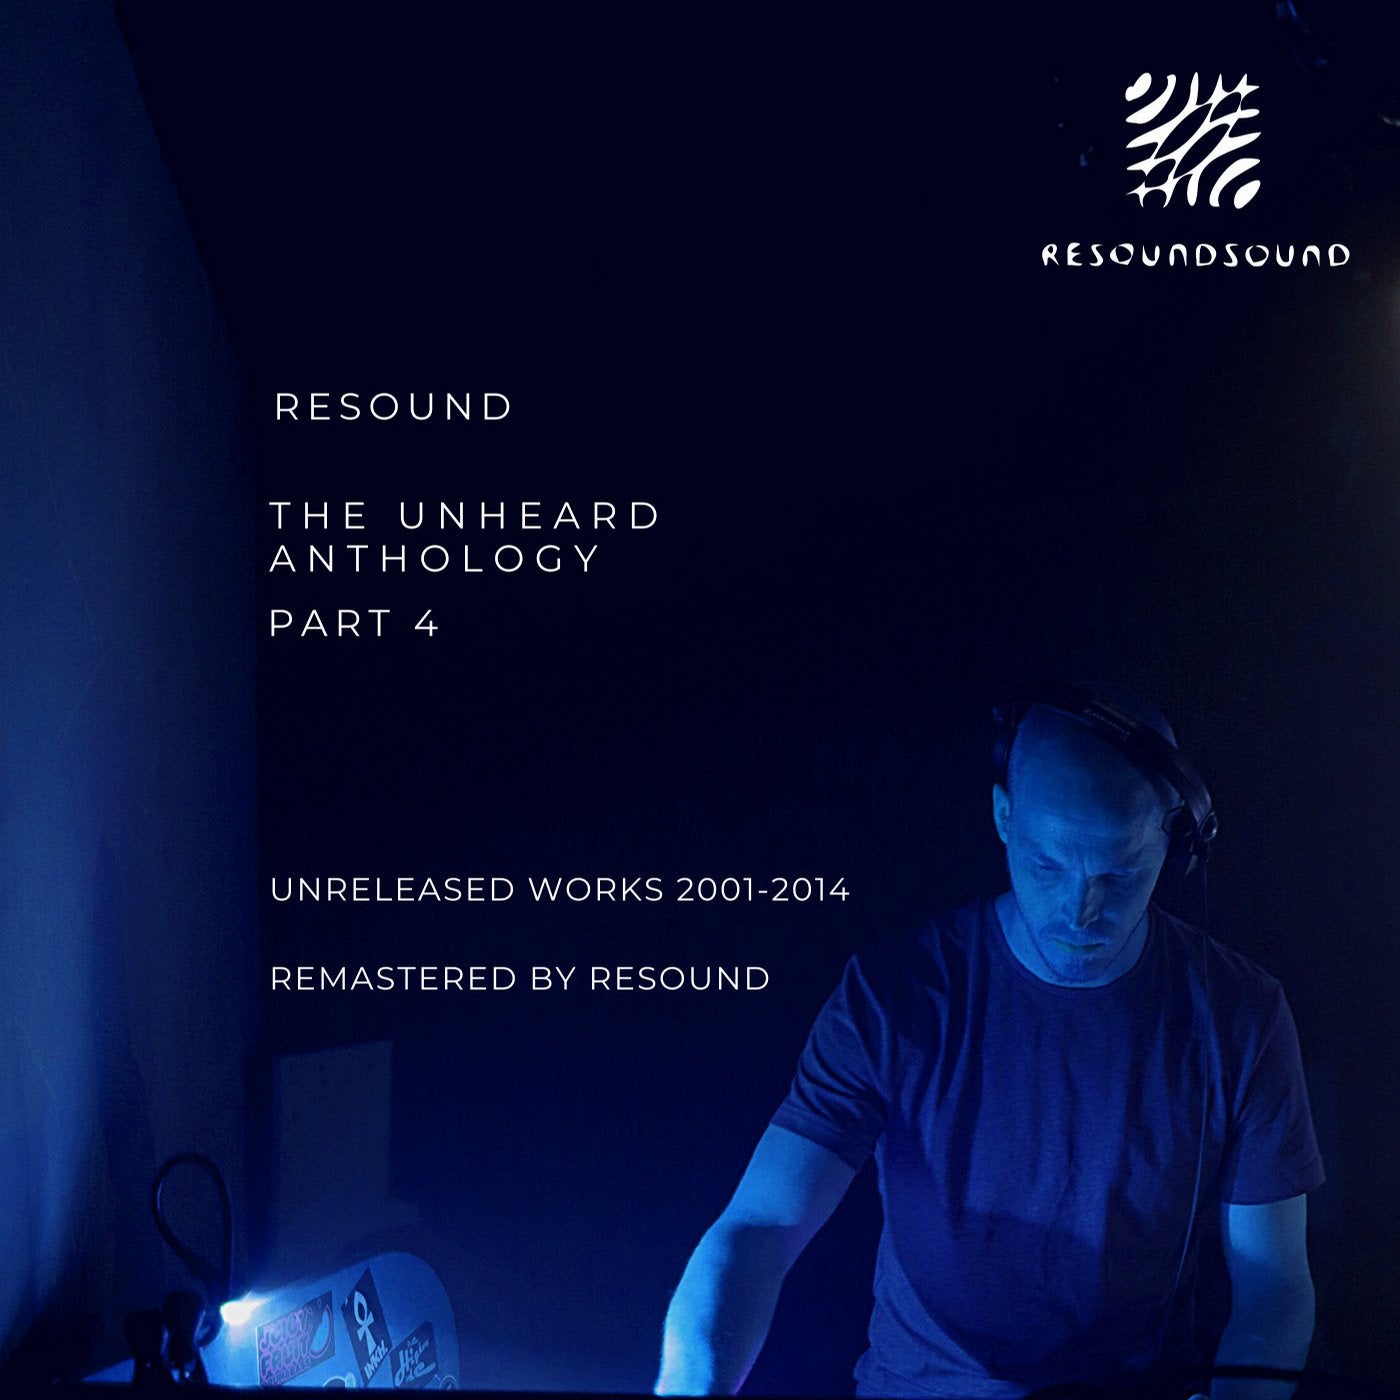 The Unheard Anthology - Part 4